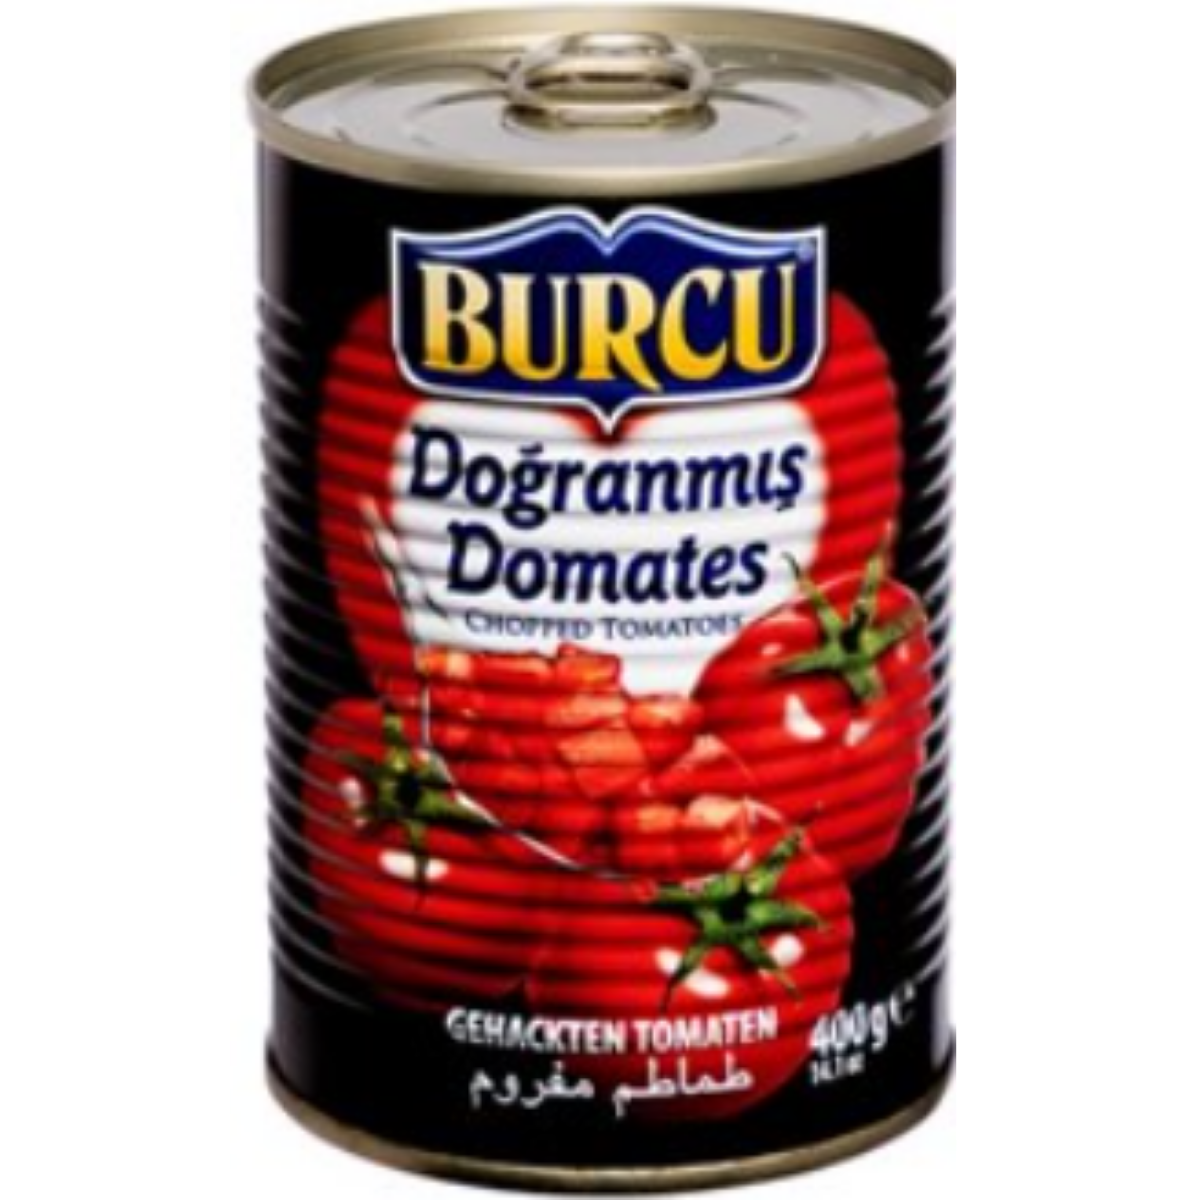 BURCU DOMATES DOGRANMIS 400 G